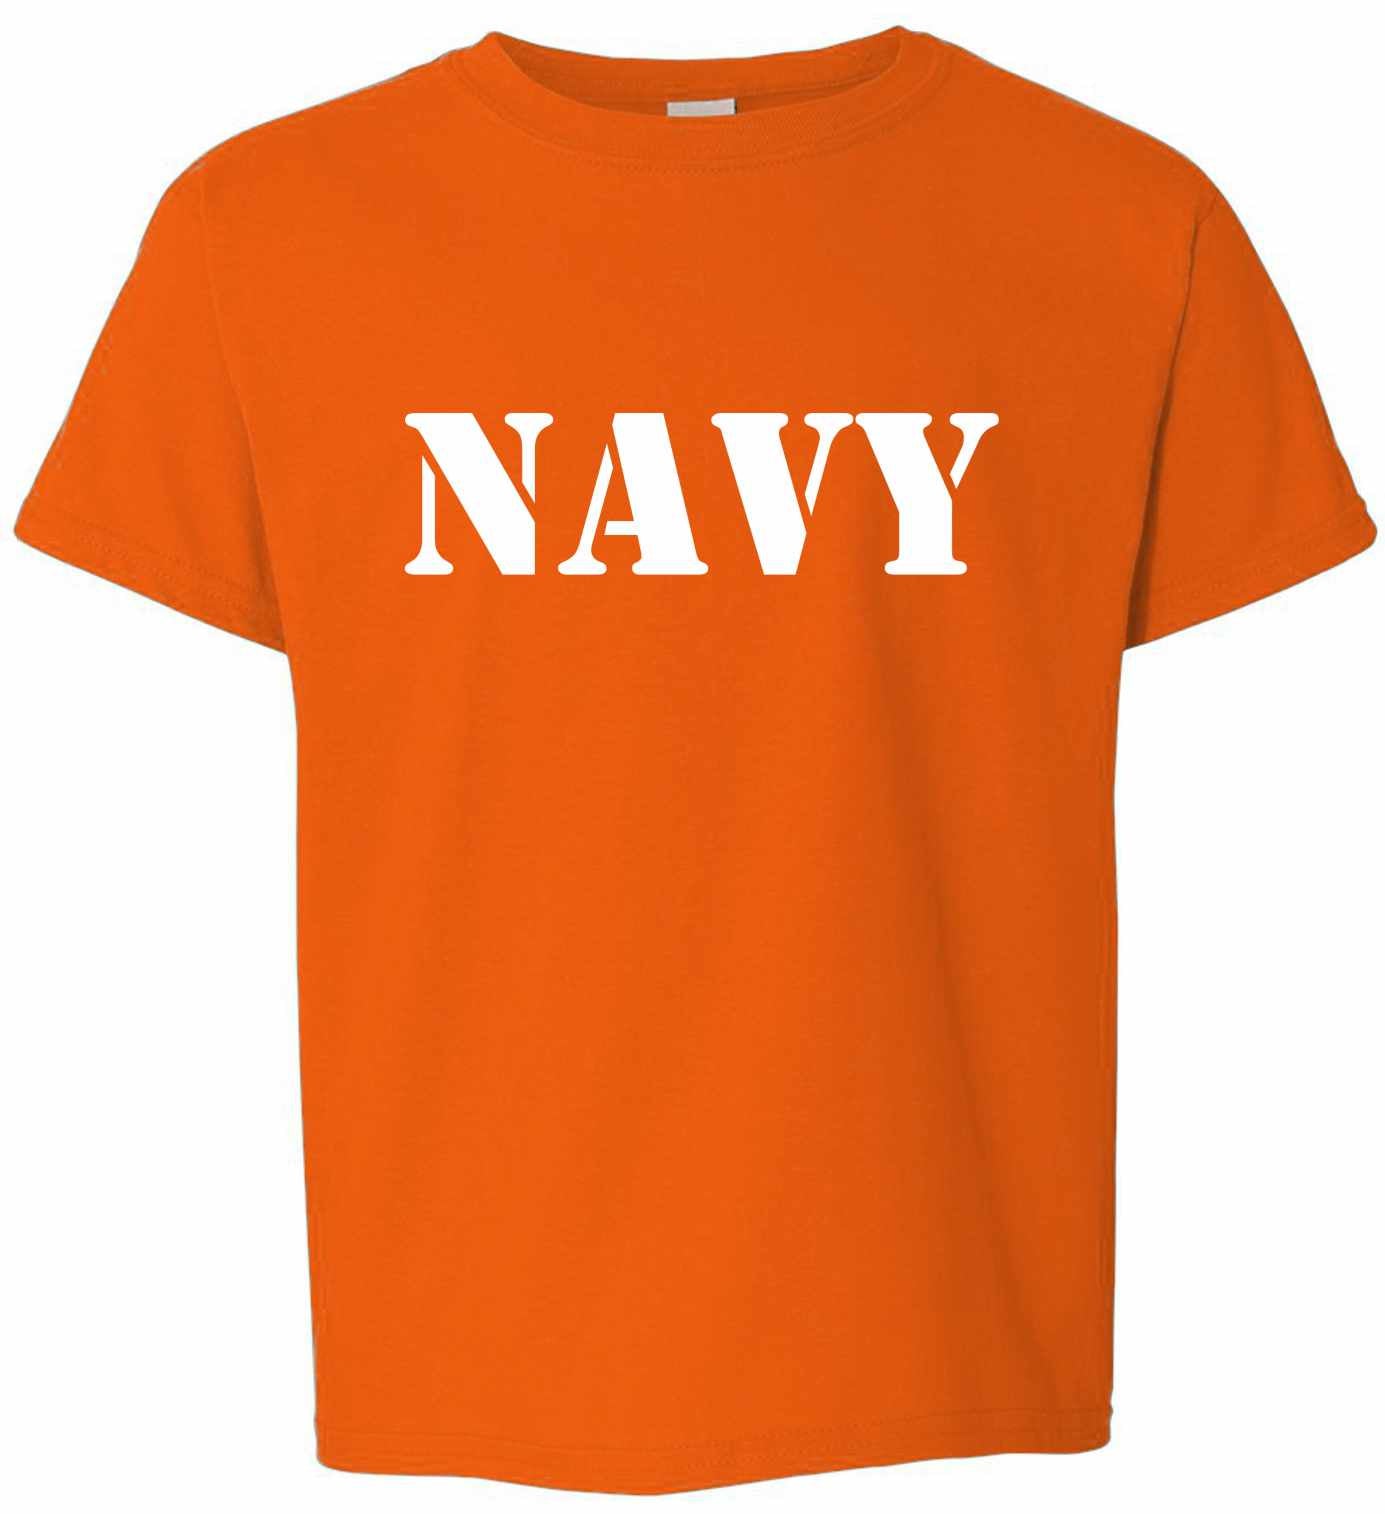 NAVY on Kids T-Shirt (#346-201)